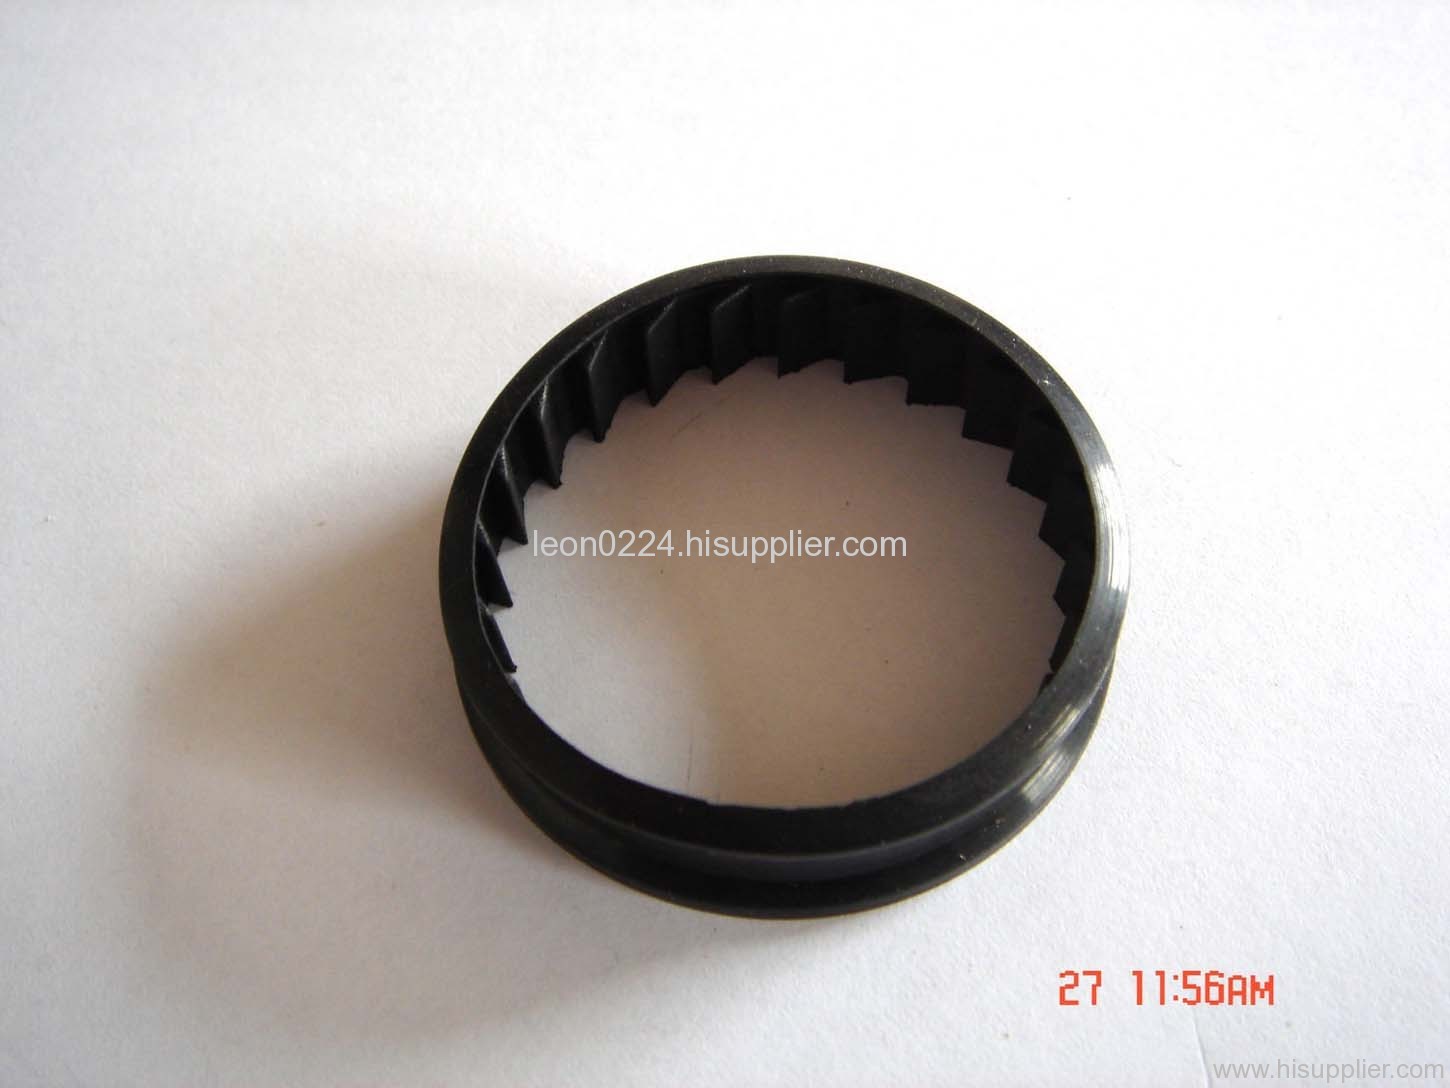 ACM bearing rubber seals